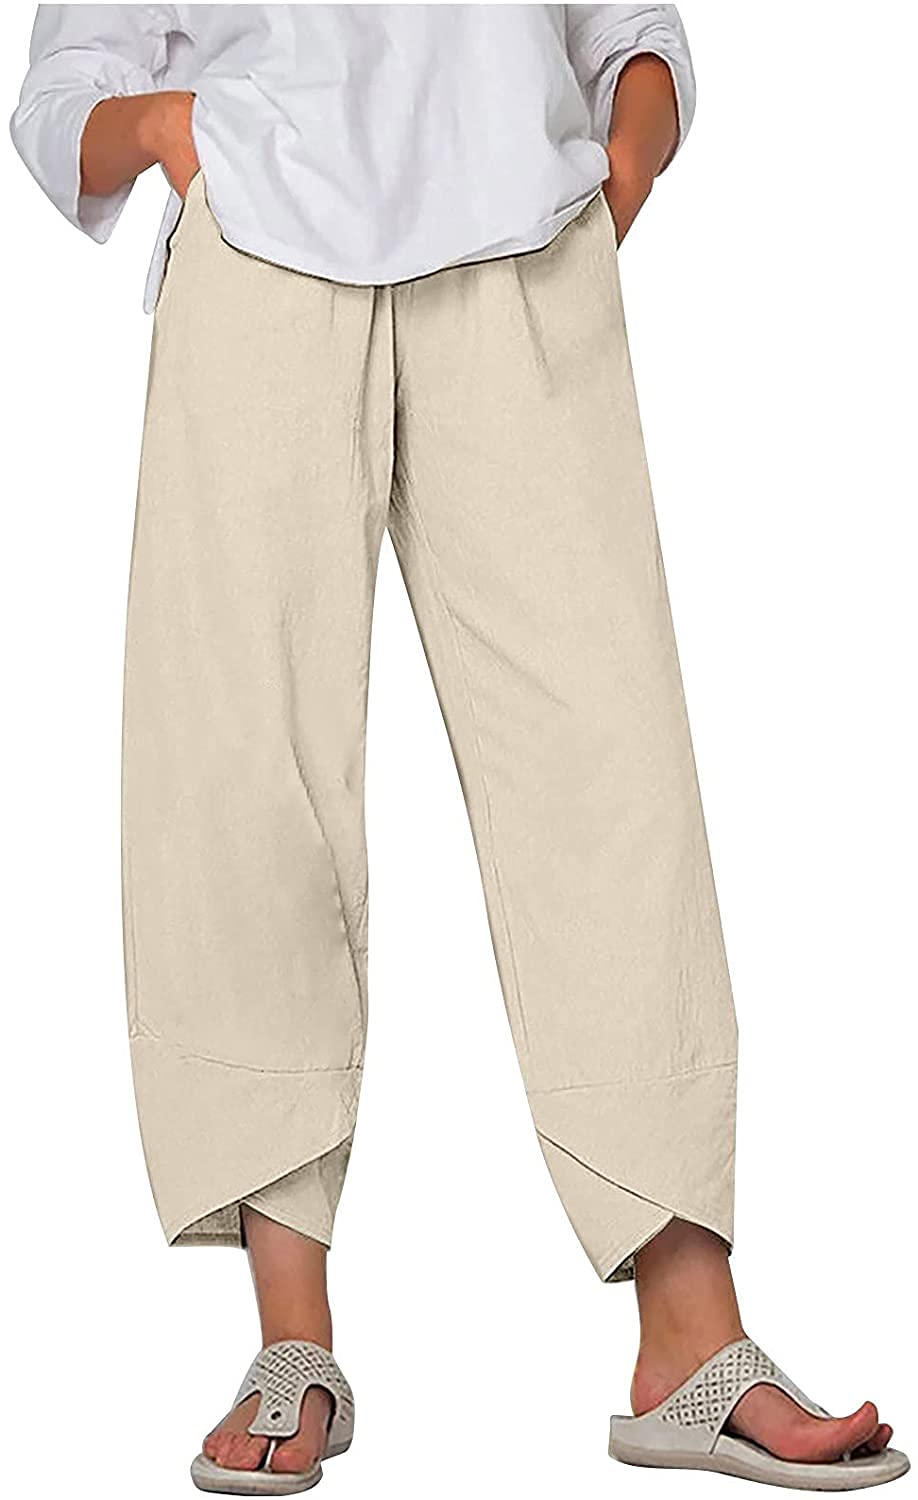 Capri Pants for Women Casual Summer Cotton Linen Pants Loose Elastic Waist  Capris Trousers Tapered Cropped Pants Pockets 